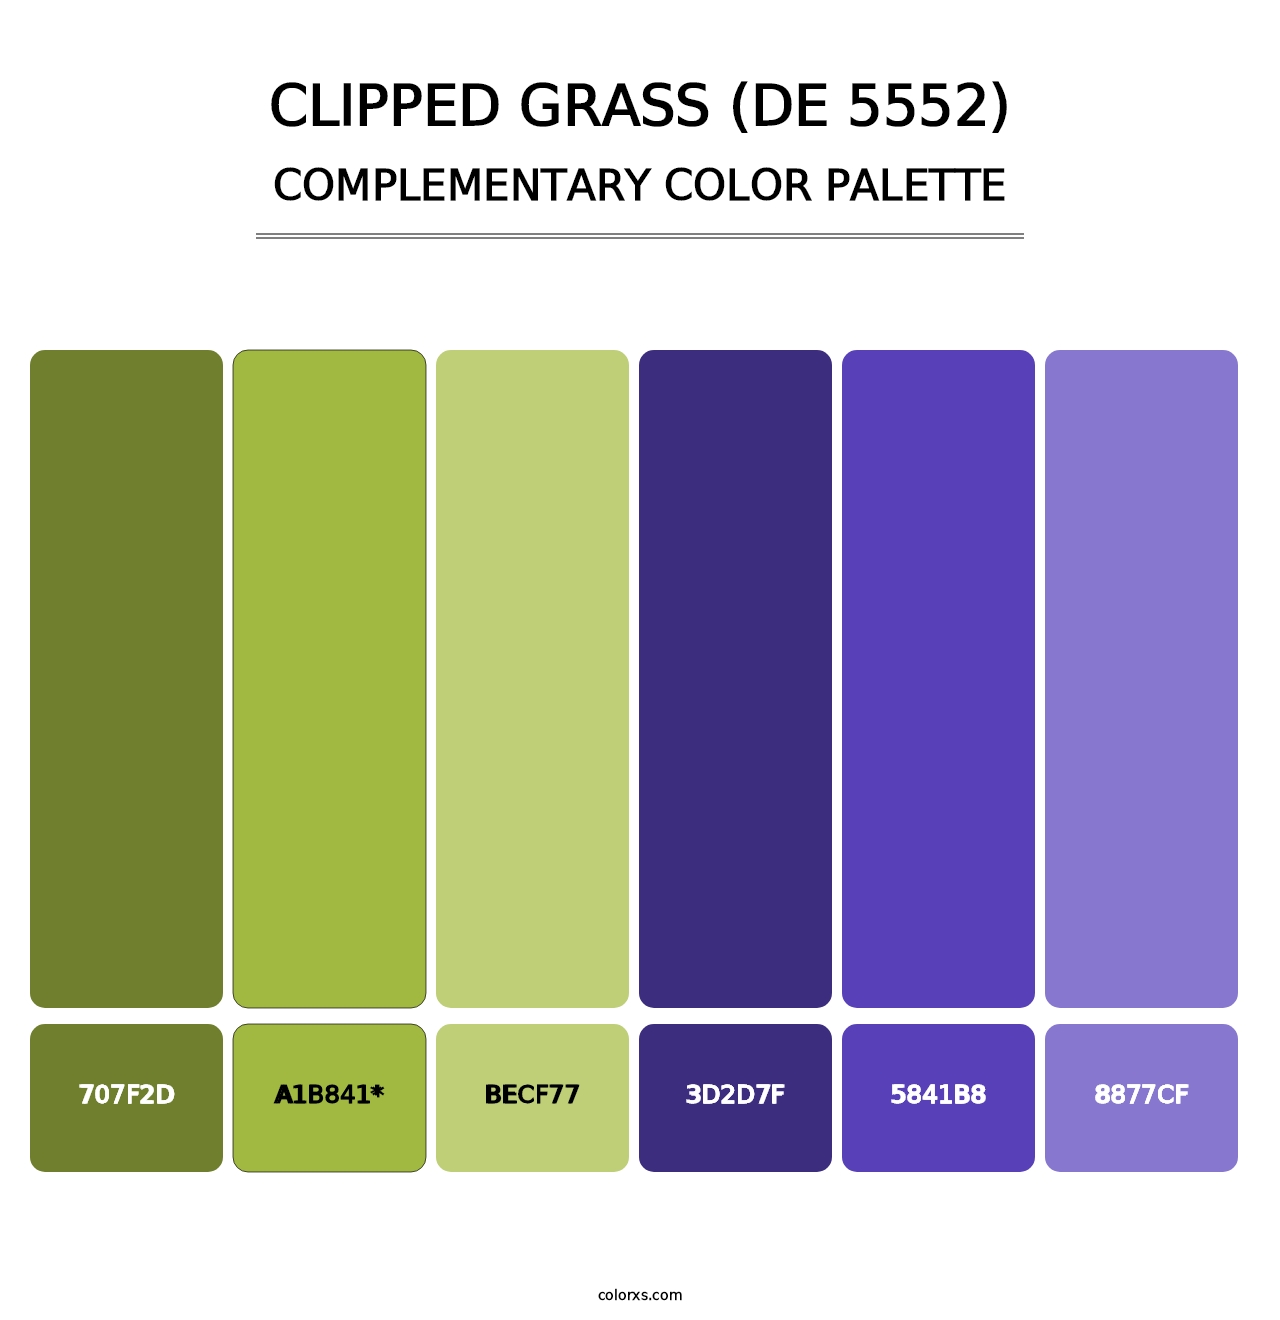 Clipped Grass (DE 5552) - Complementary Color Palette